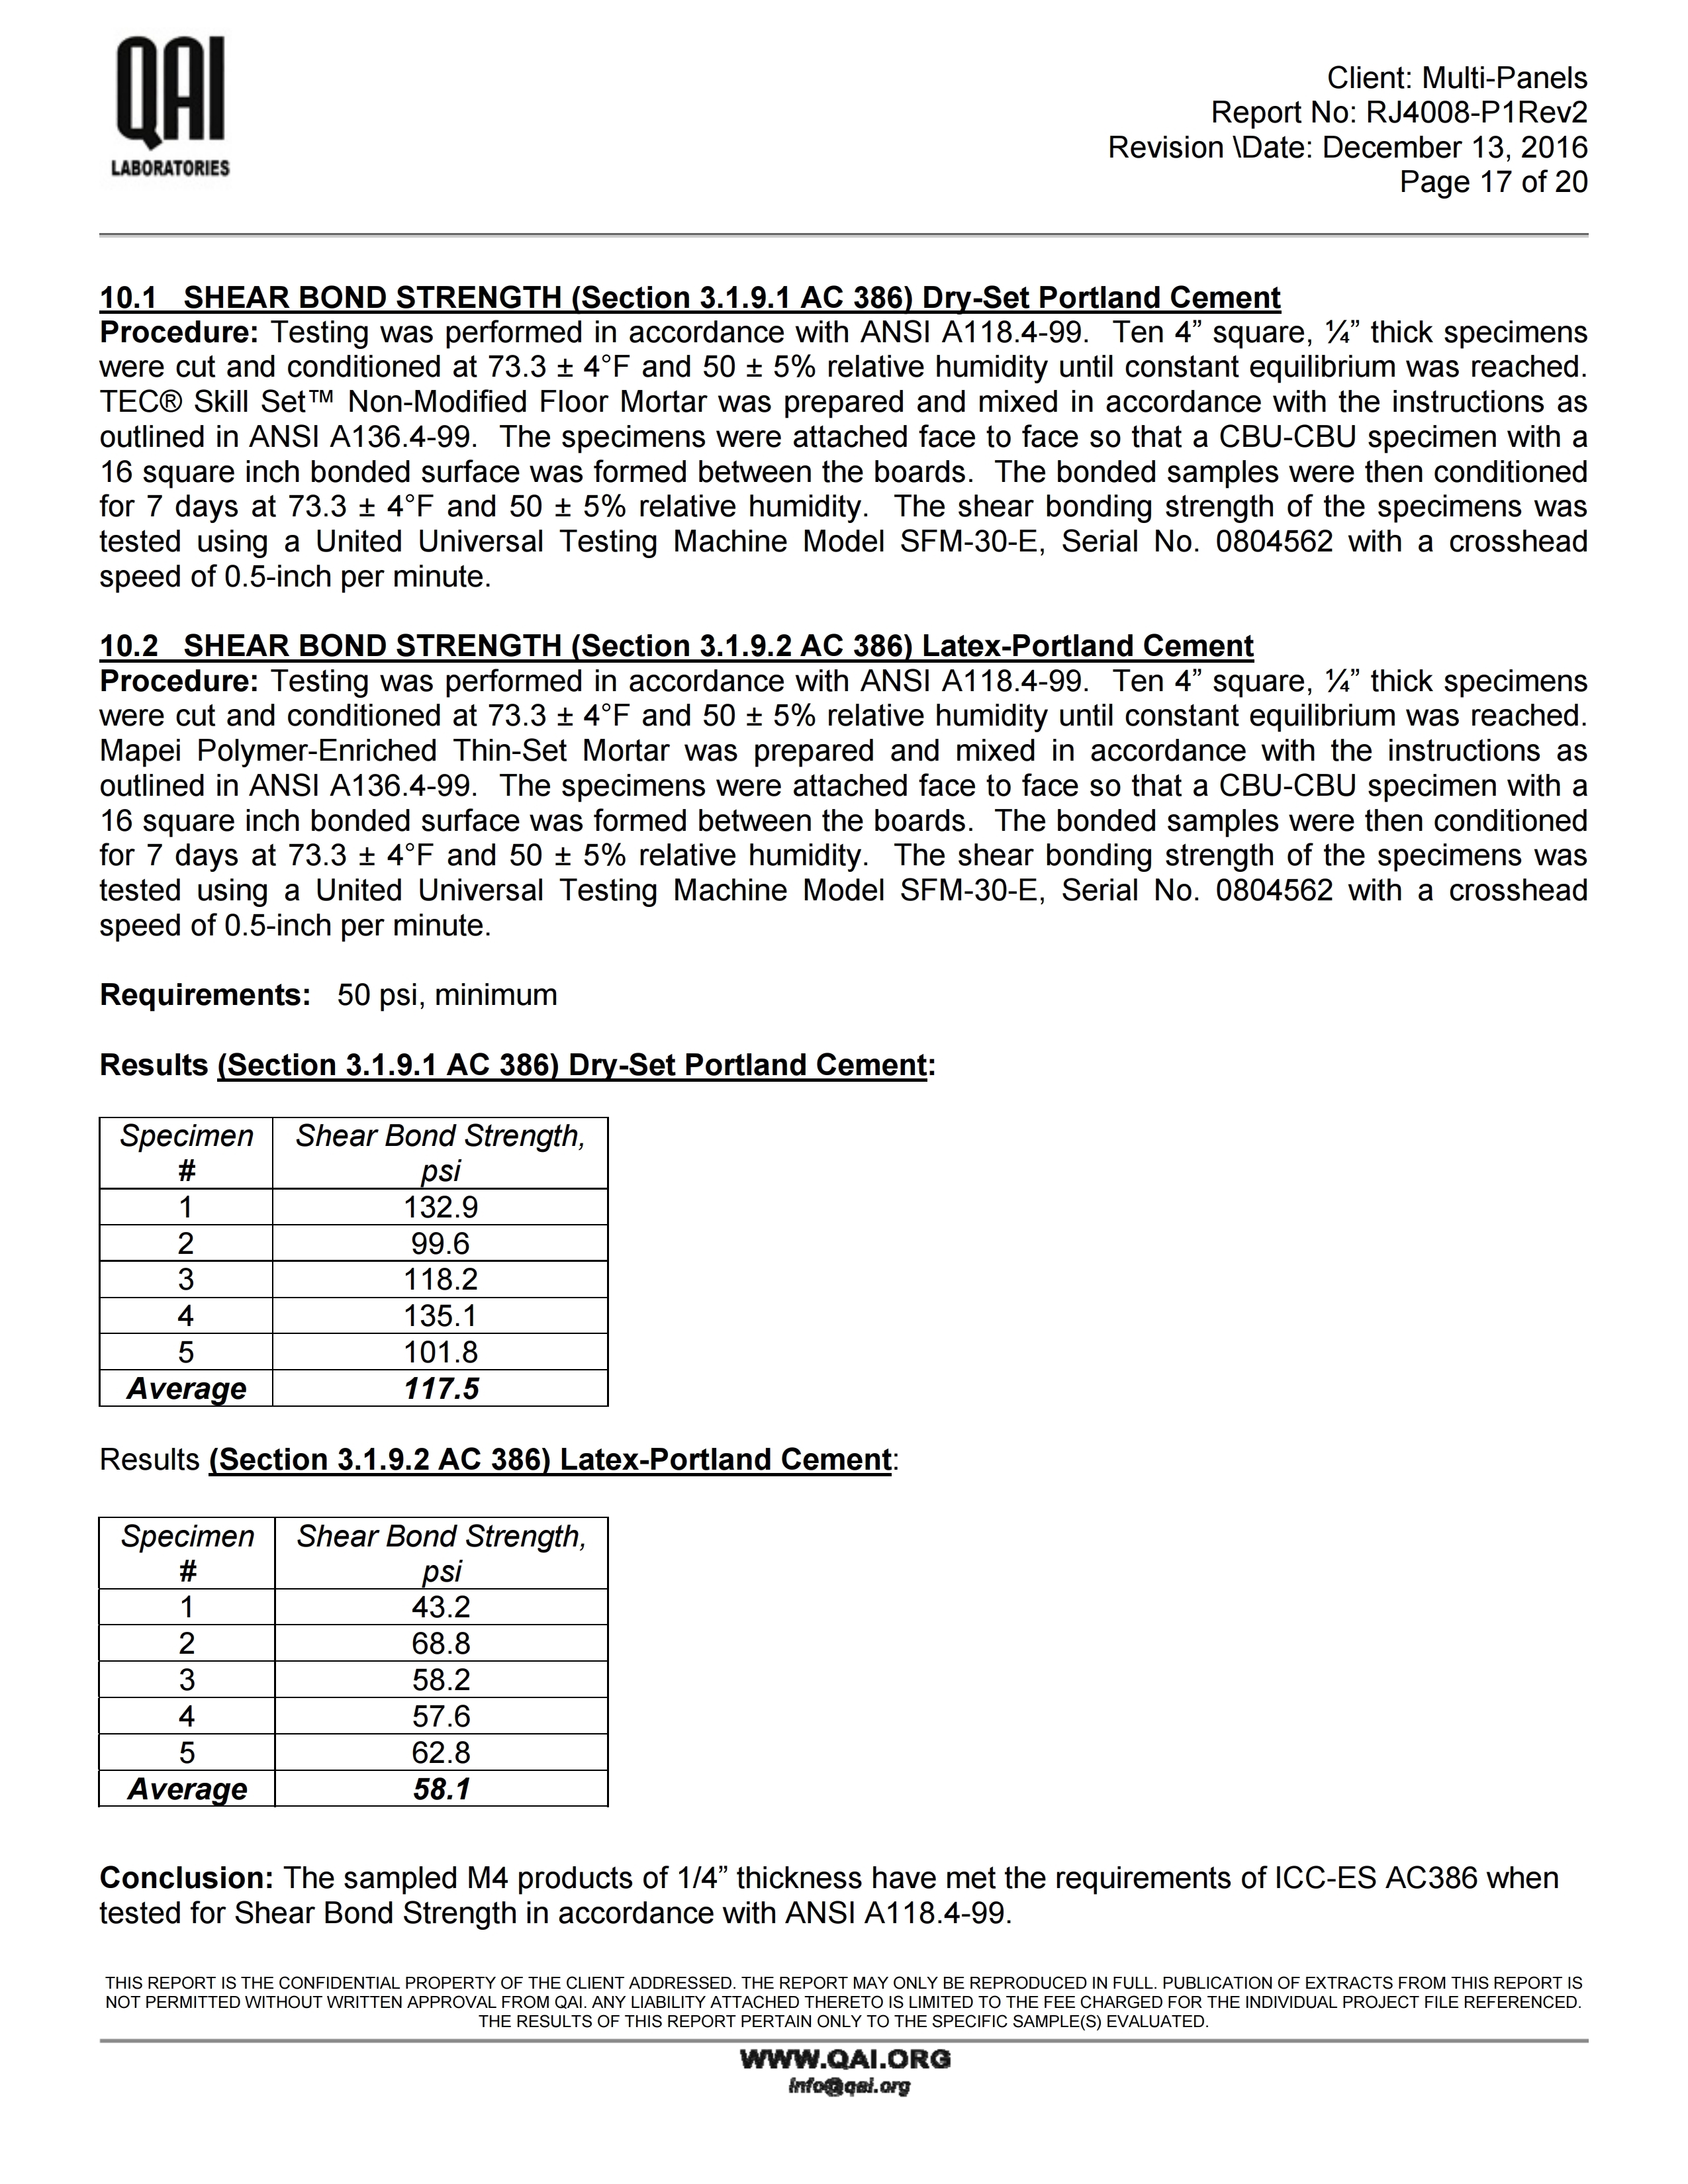 RJ4008-P1REV2-Multi-Panels-M4-AC386 Report-13122016 (2).pdf_page_17.jpg